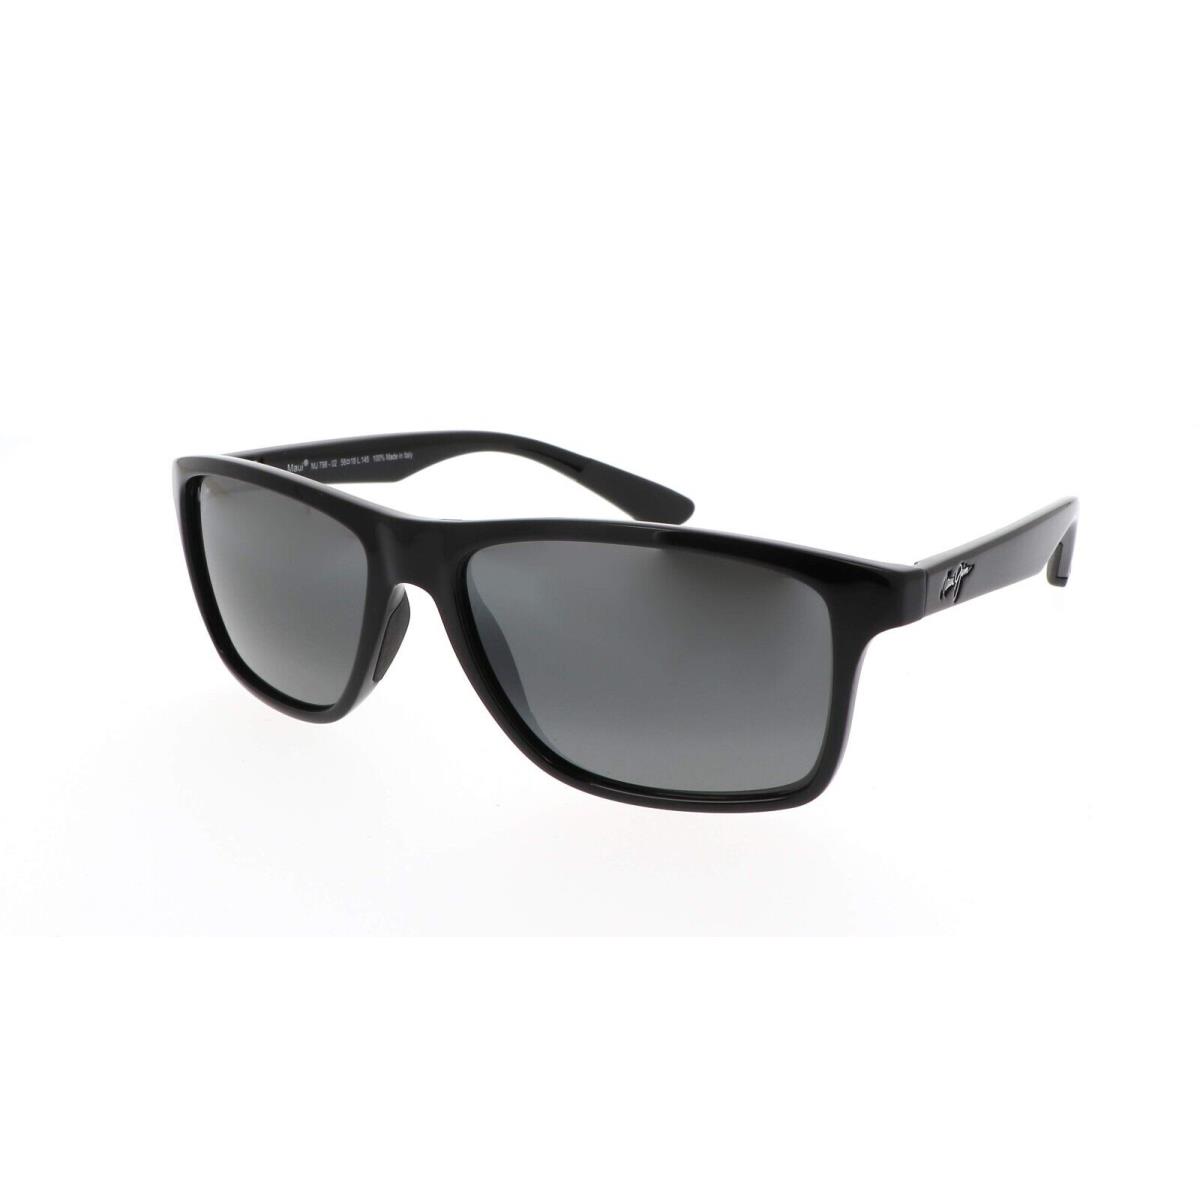 Maui Jim Sunglasses Onshore 798-02 Gloss Black Frame / Neutral Gray Polarized